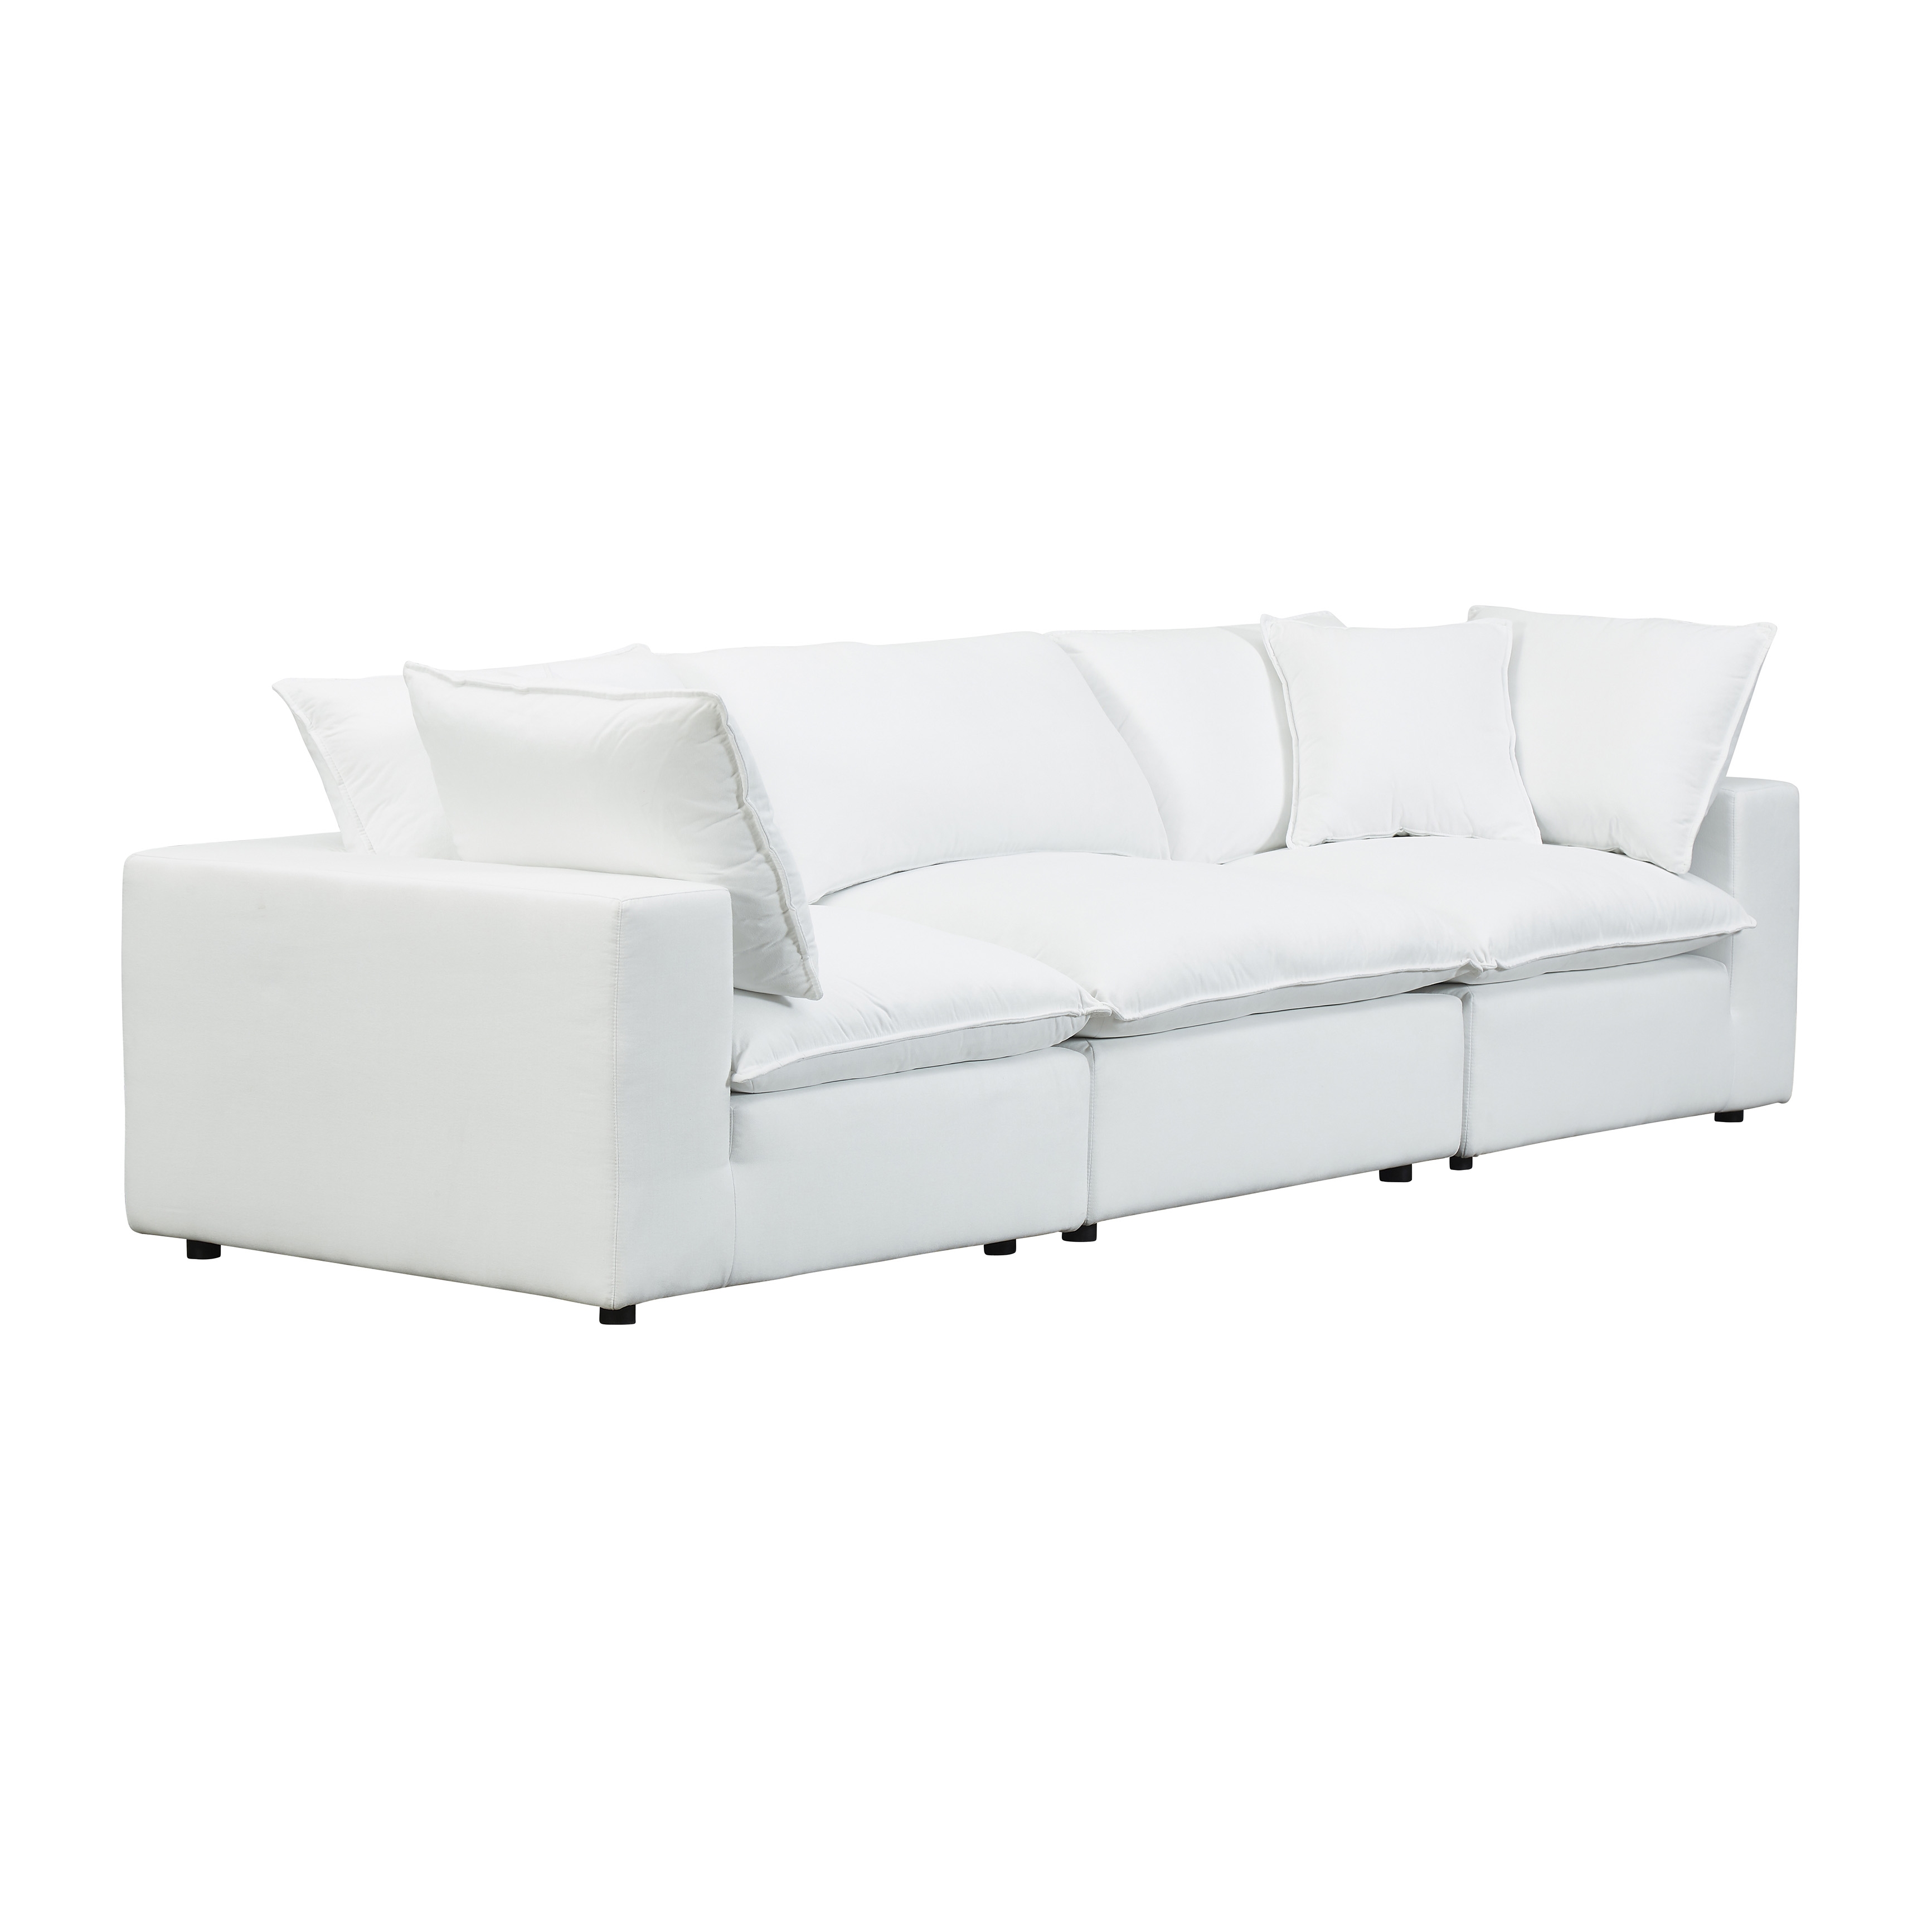 Cali Pearl Modular Sofa - Image 4